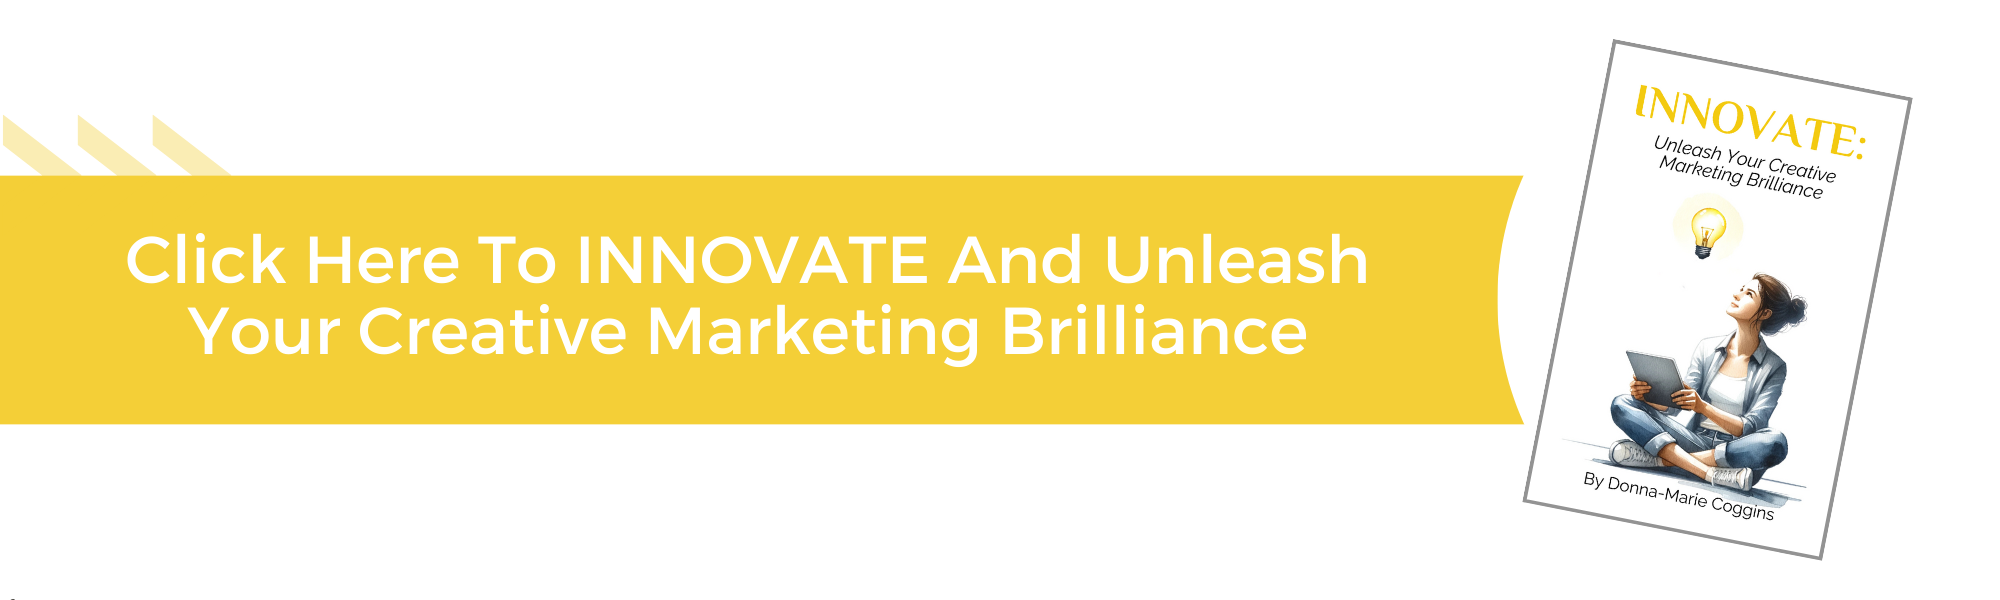 INNOVATE: Unleash Your Creative Marketing Brilliance